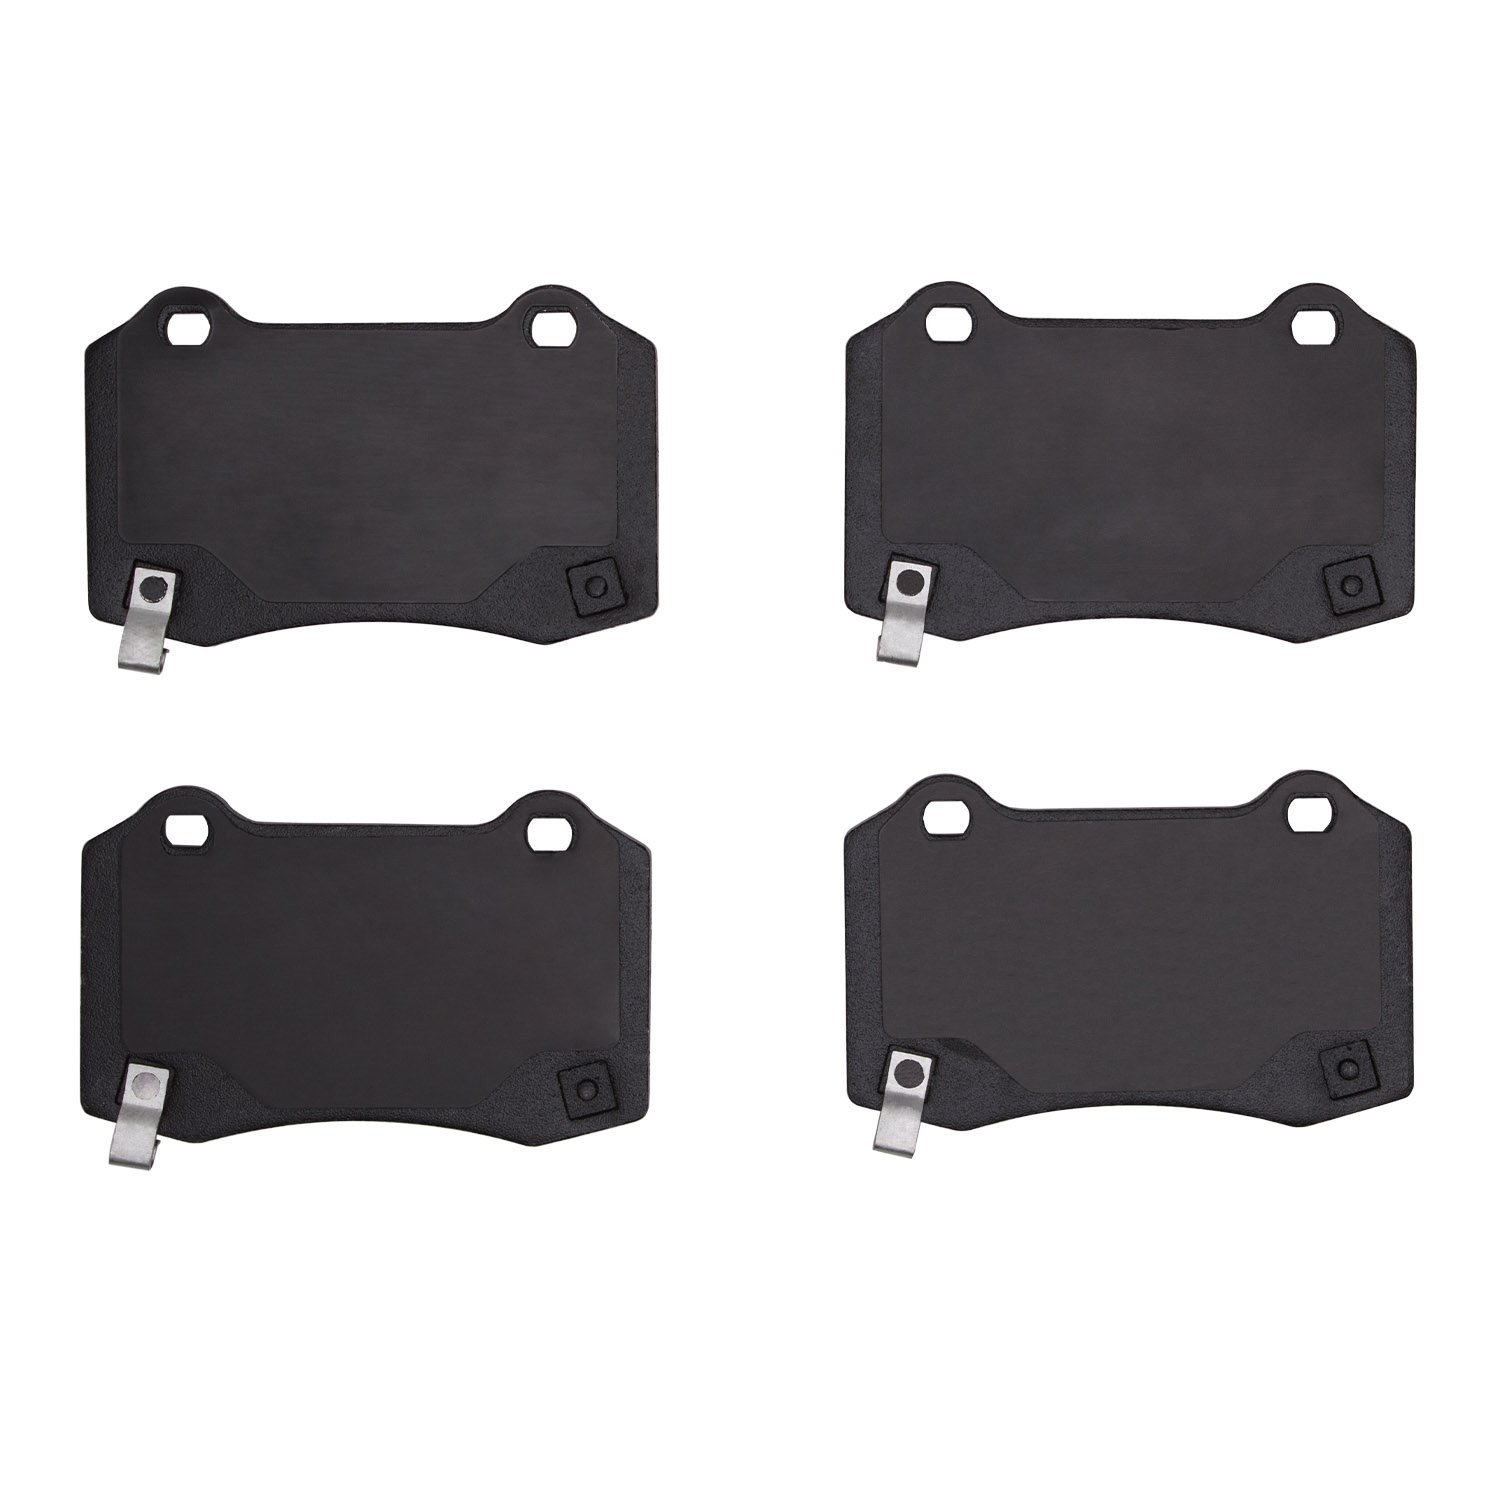 1000-1053-00 Track/Street Low-Metallic Brake Pads Kit, Fits Select Multiple Makes/Models, Position: Rear